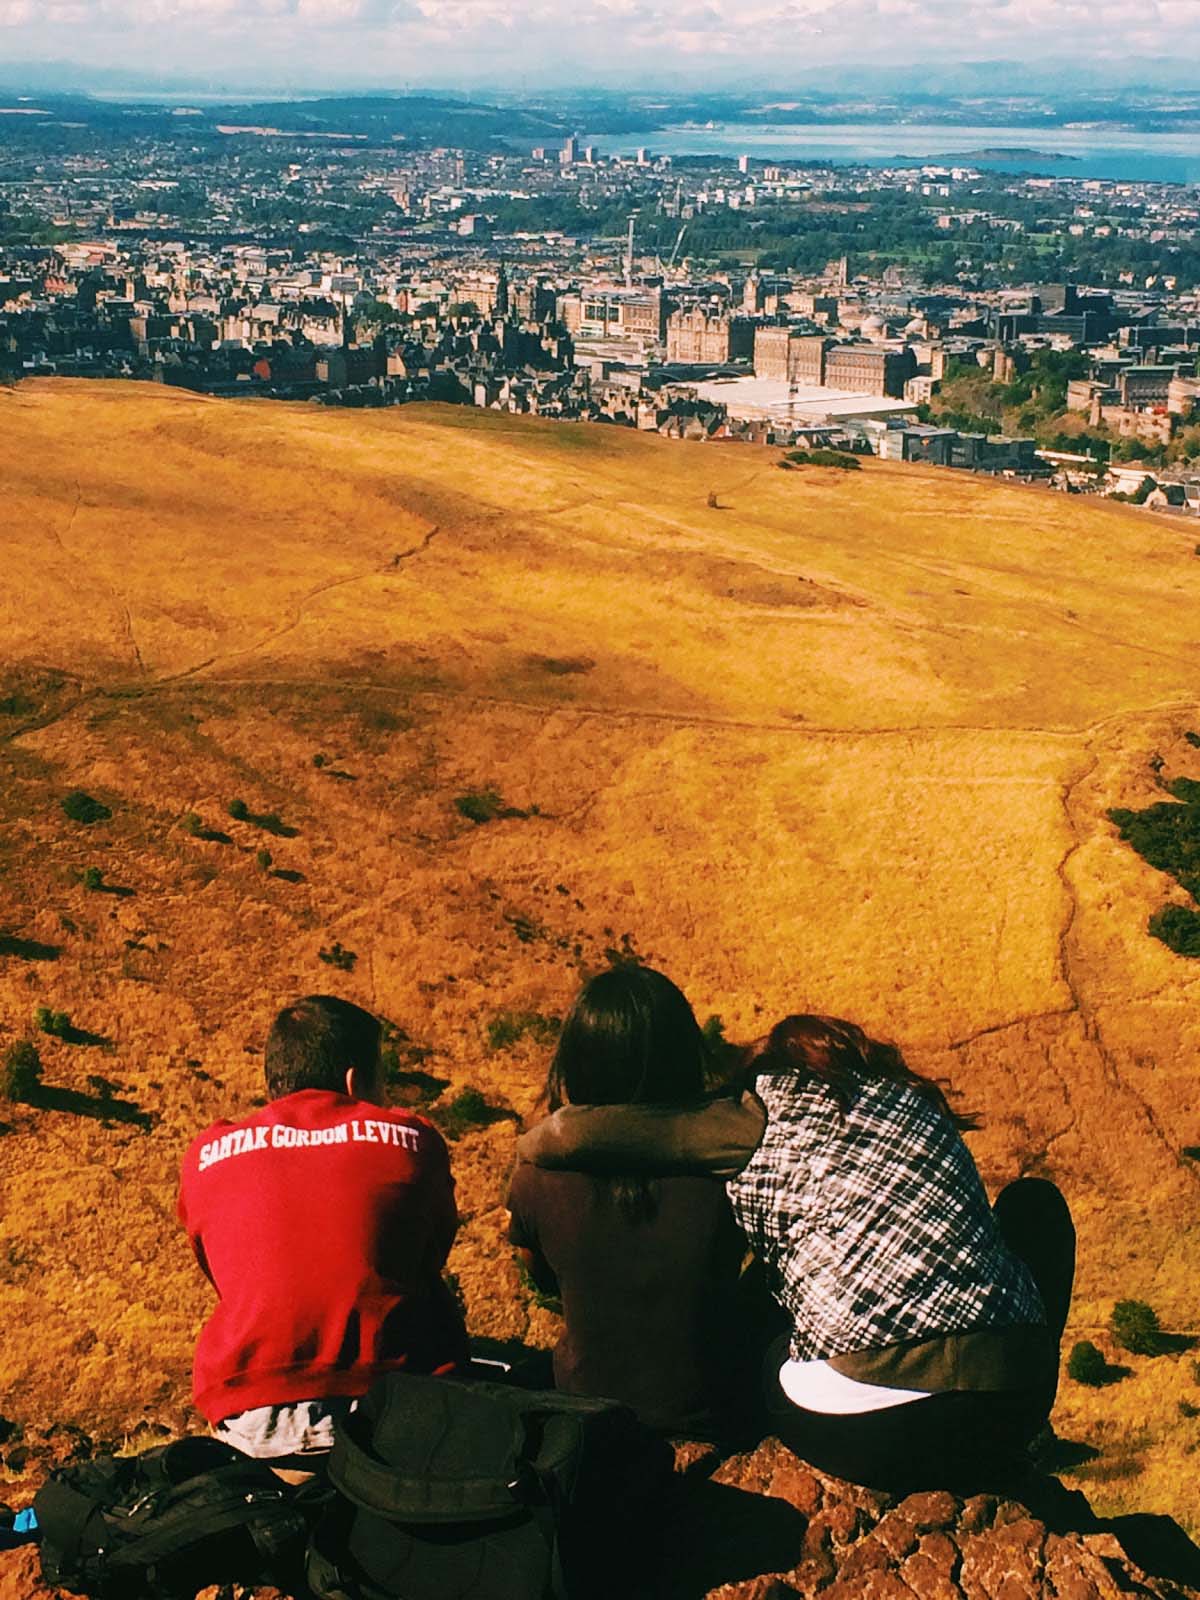 Arthur's Seat provides wonderful views of Edinburgh in all directions